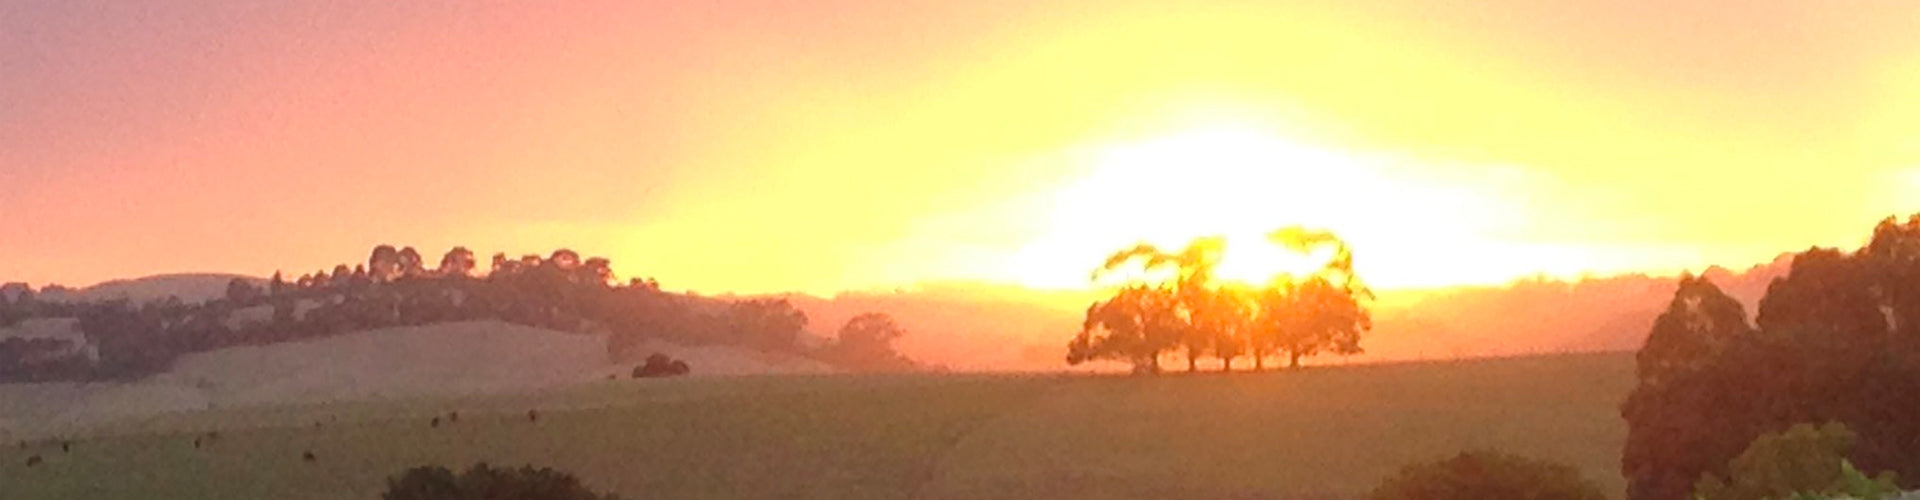 Daybreak over the Gippsland wine region of Victoria in Australia